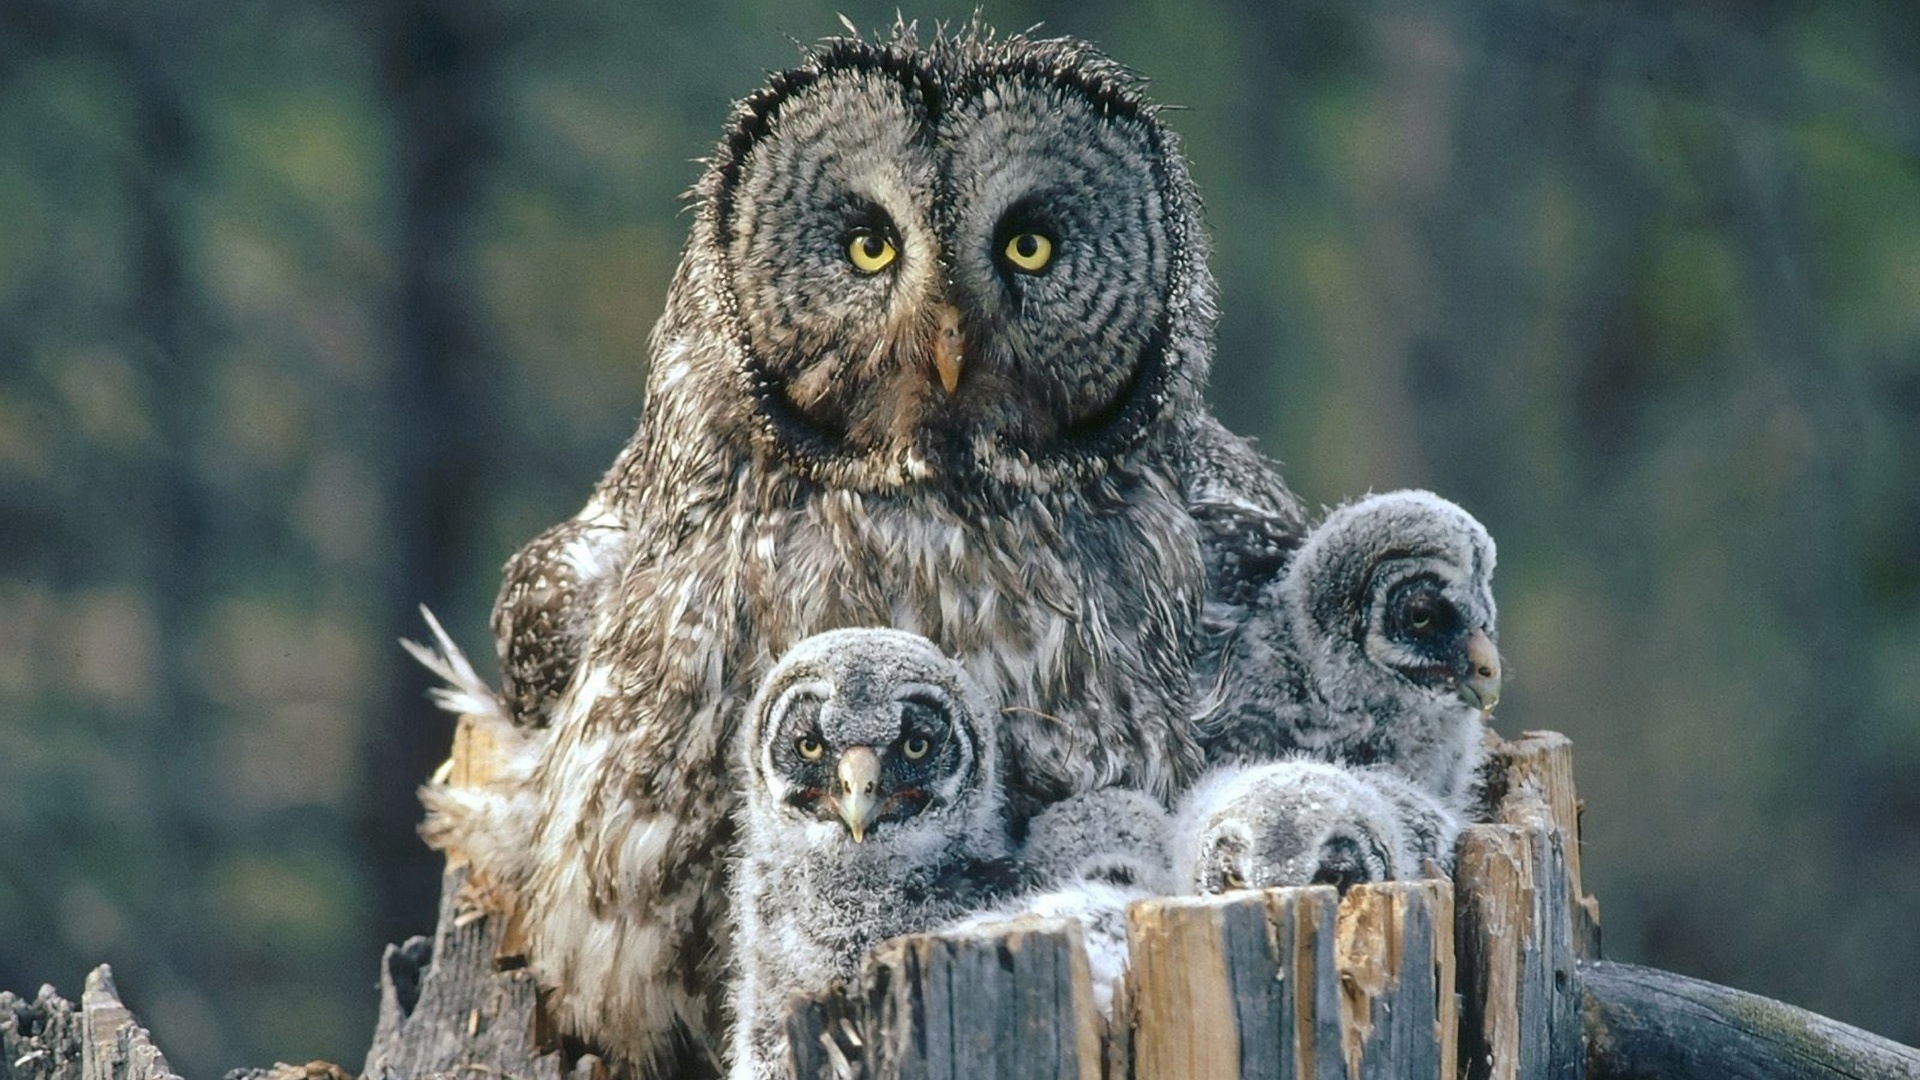 Owl Family Background for 1920 x 1080 HDTV 1080p resolution